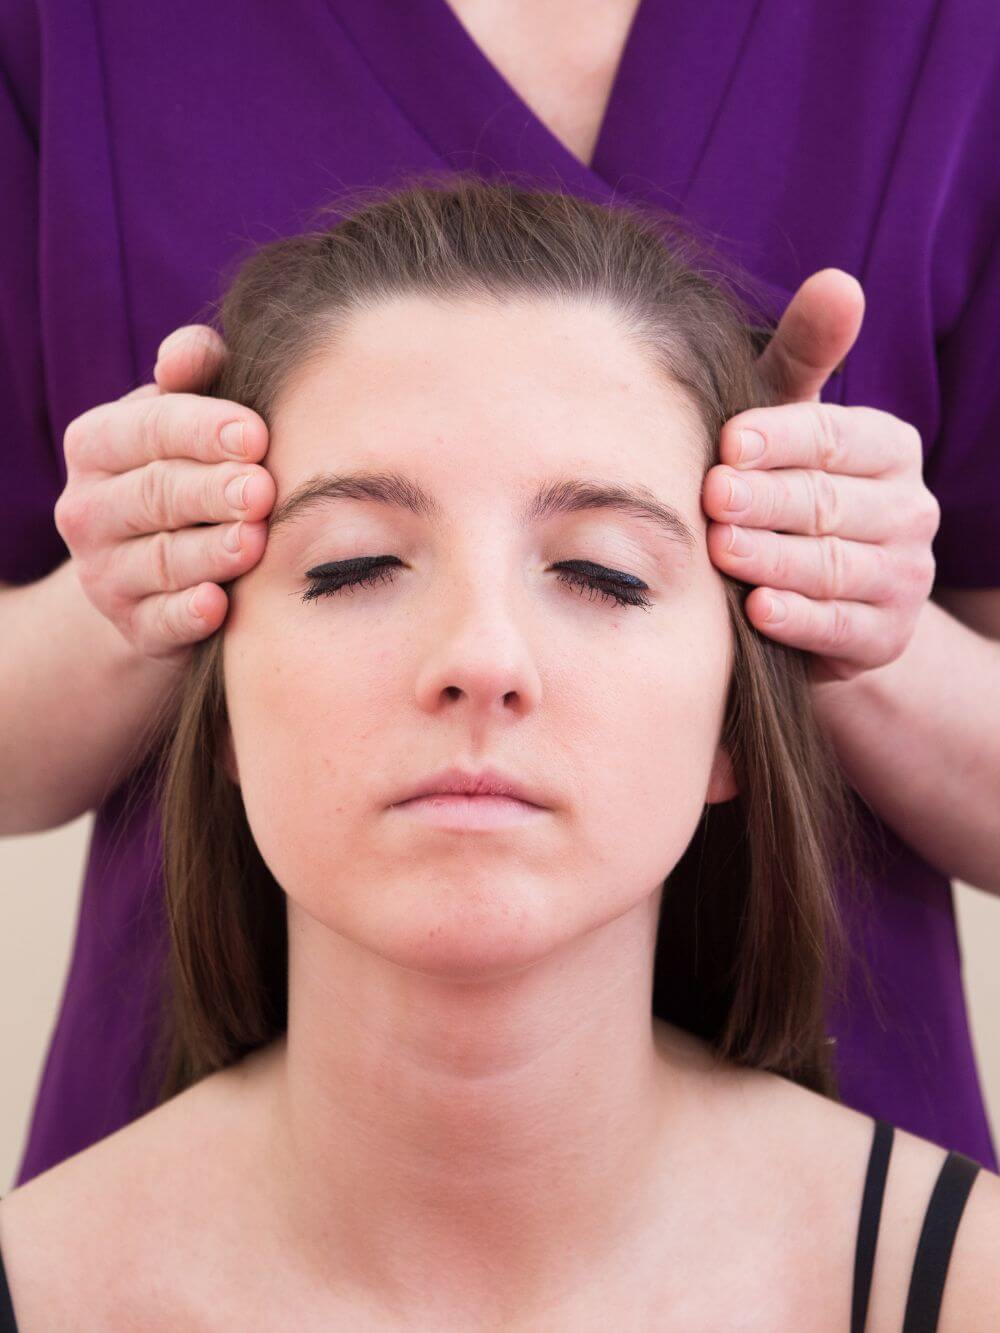 Indian Head Massage + Neck & Shoulders